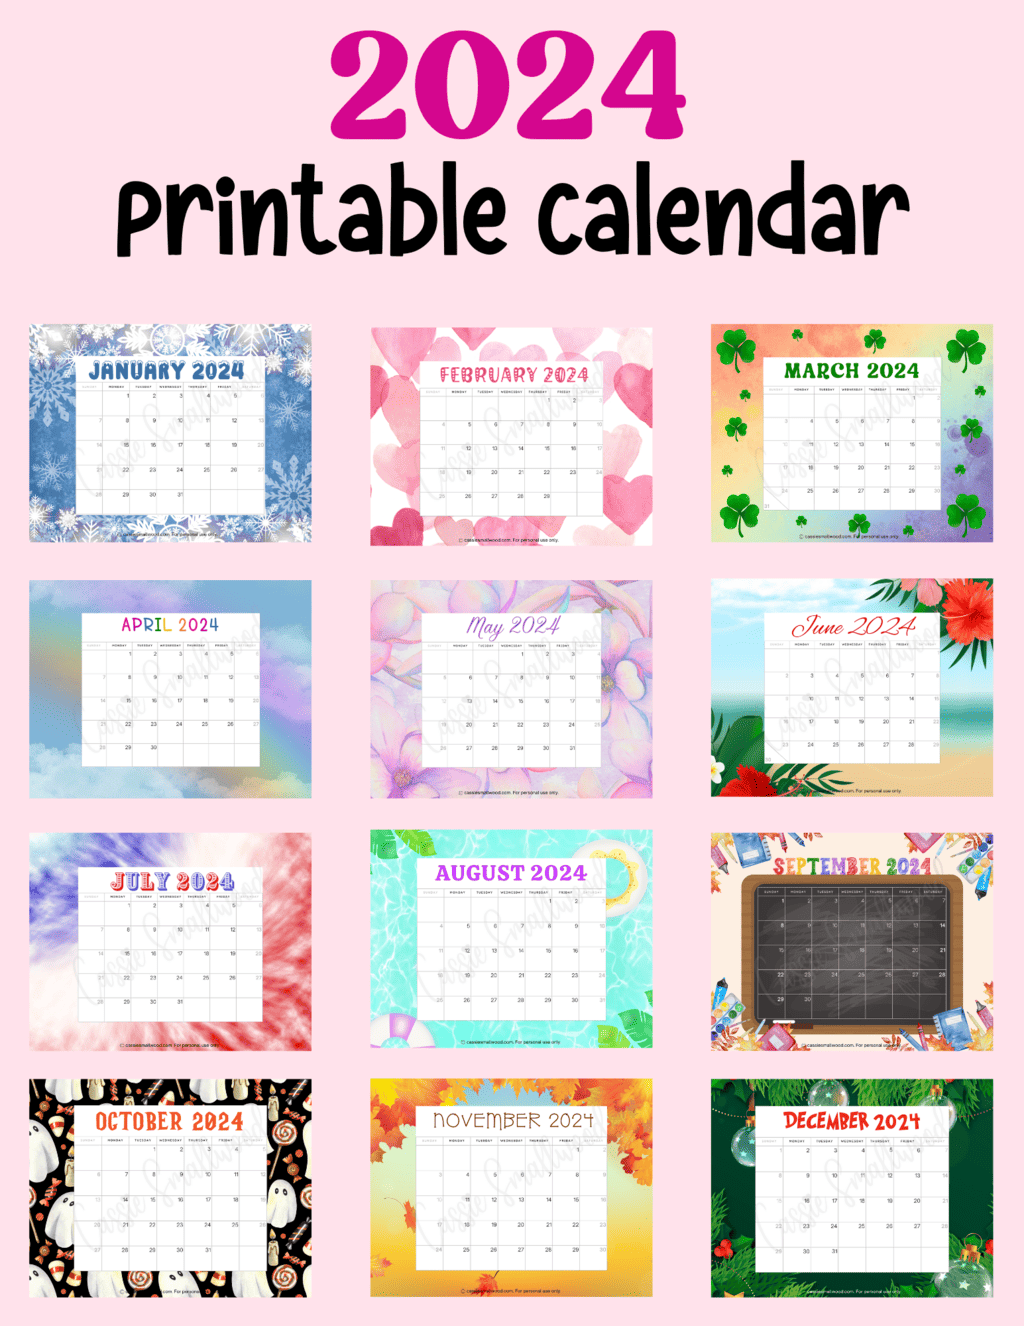 Cute Free Printable Monthly Calendar 2024 - Cassie Smallwood for Aesthetic 2024 Calendar Printable